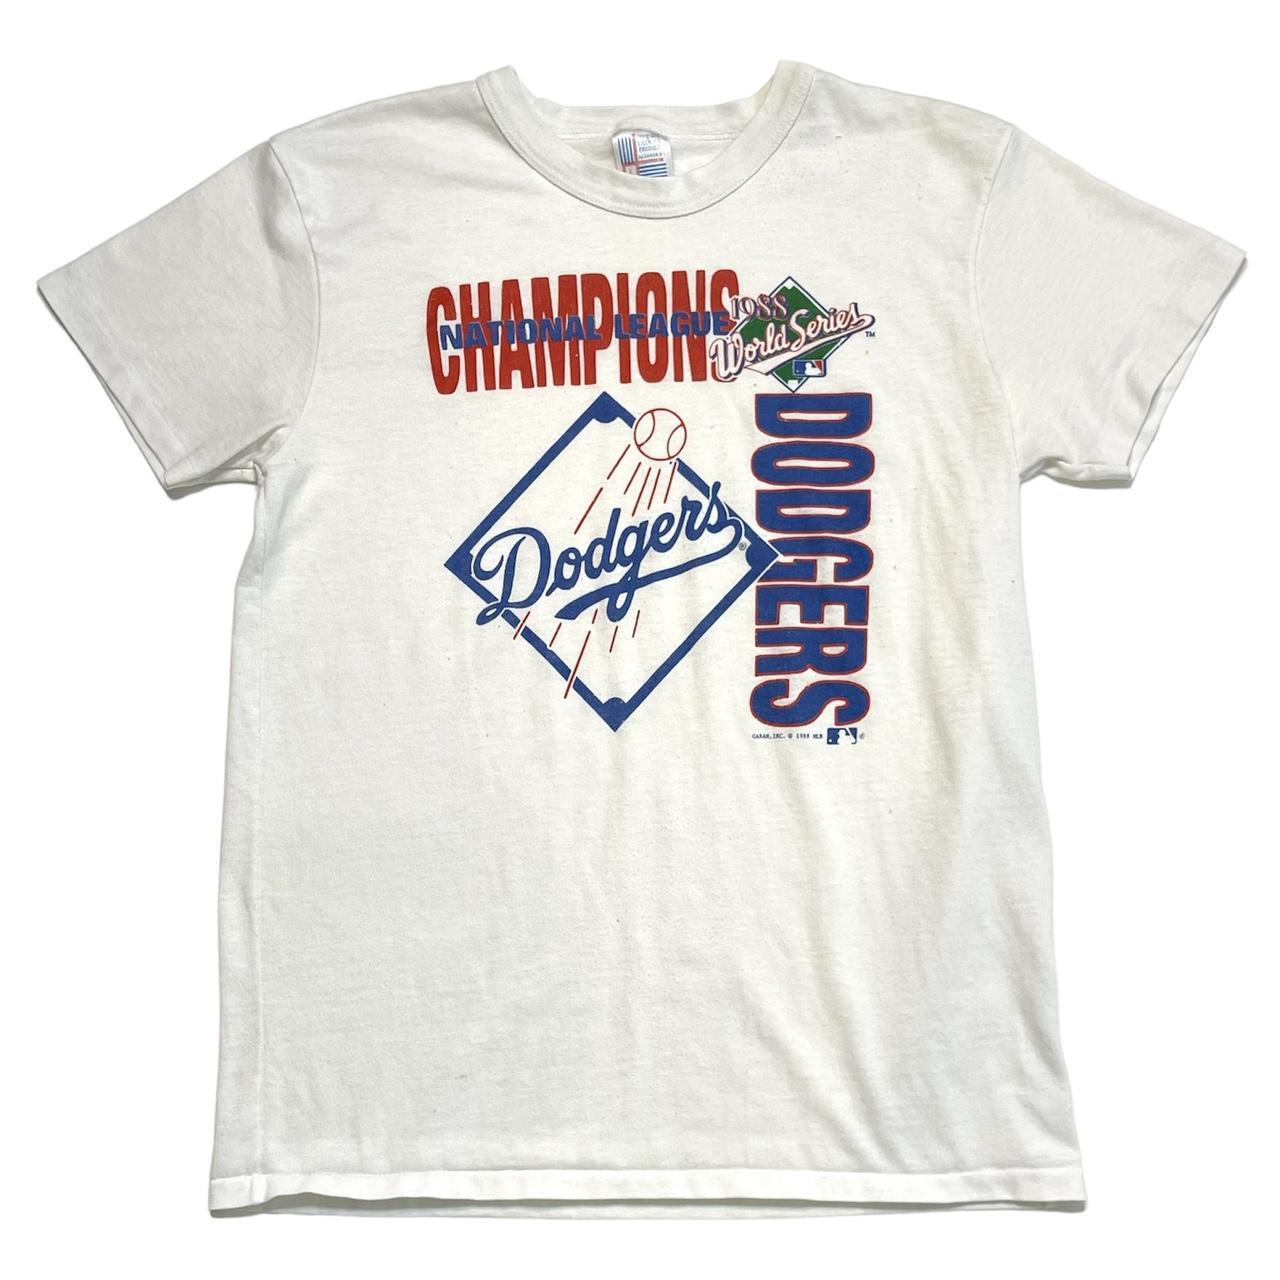 Vintage Los Angeles Dodgers 1988 World Series Champions T Shirt